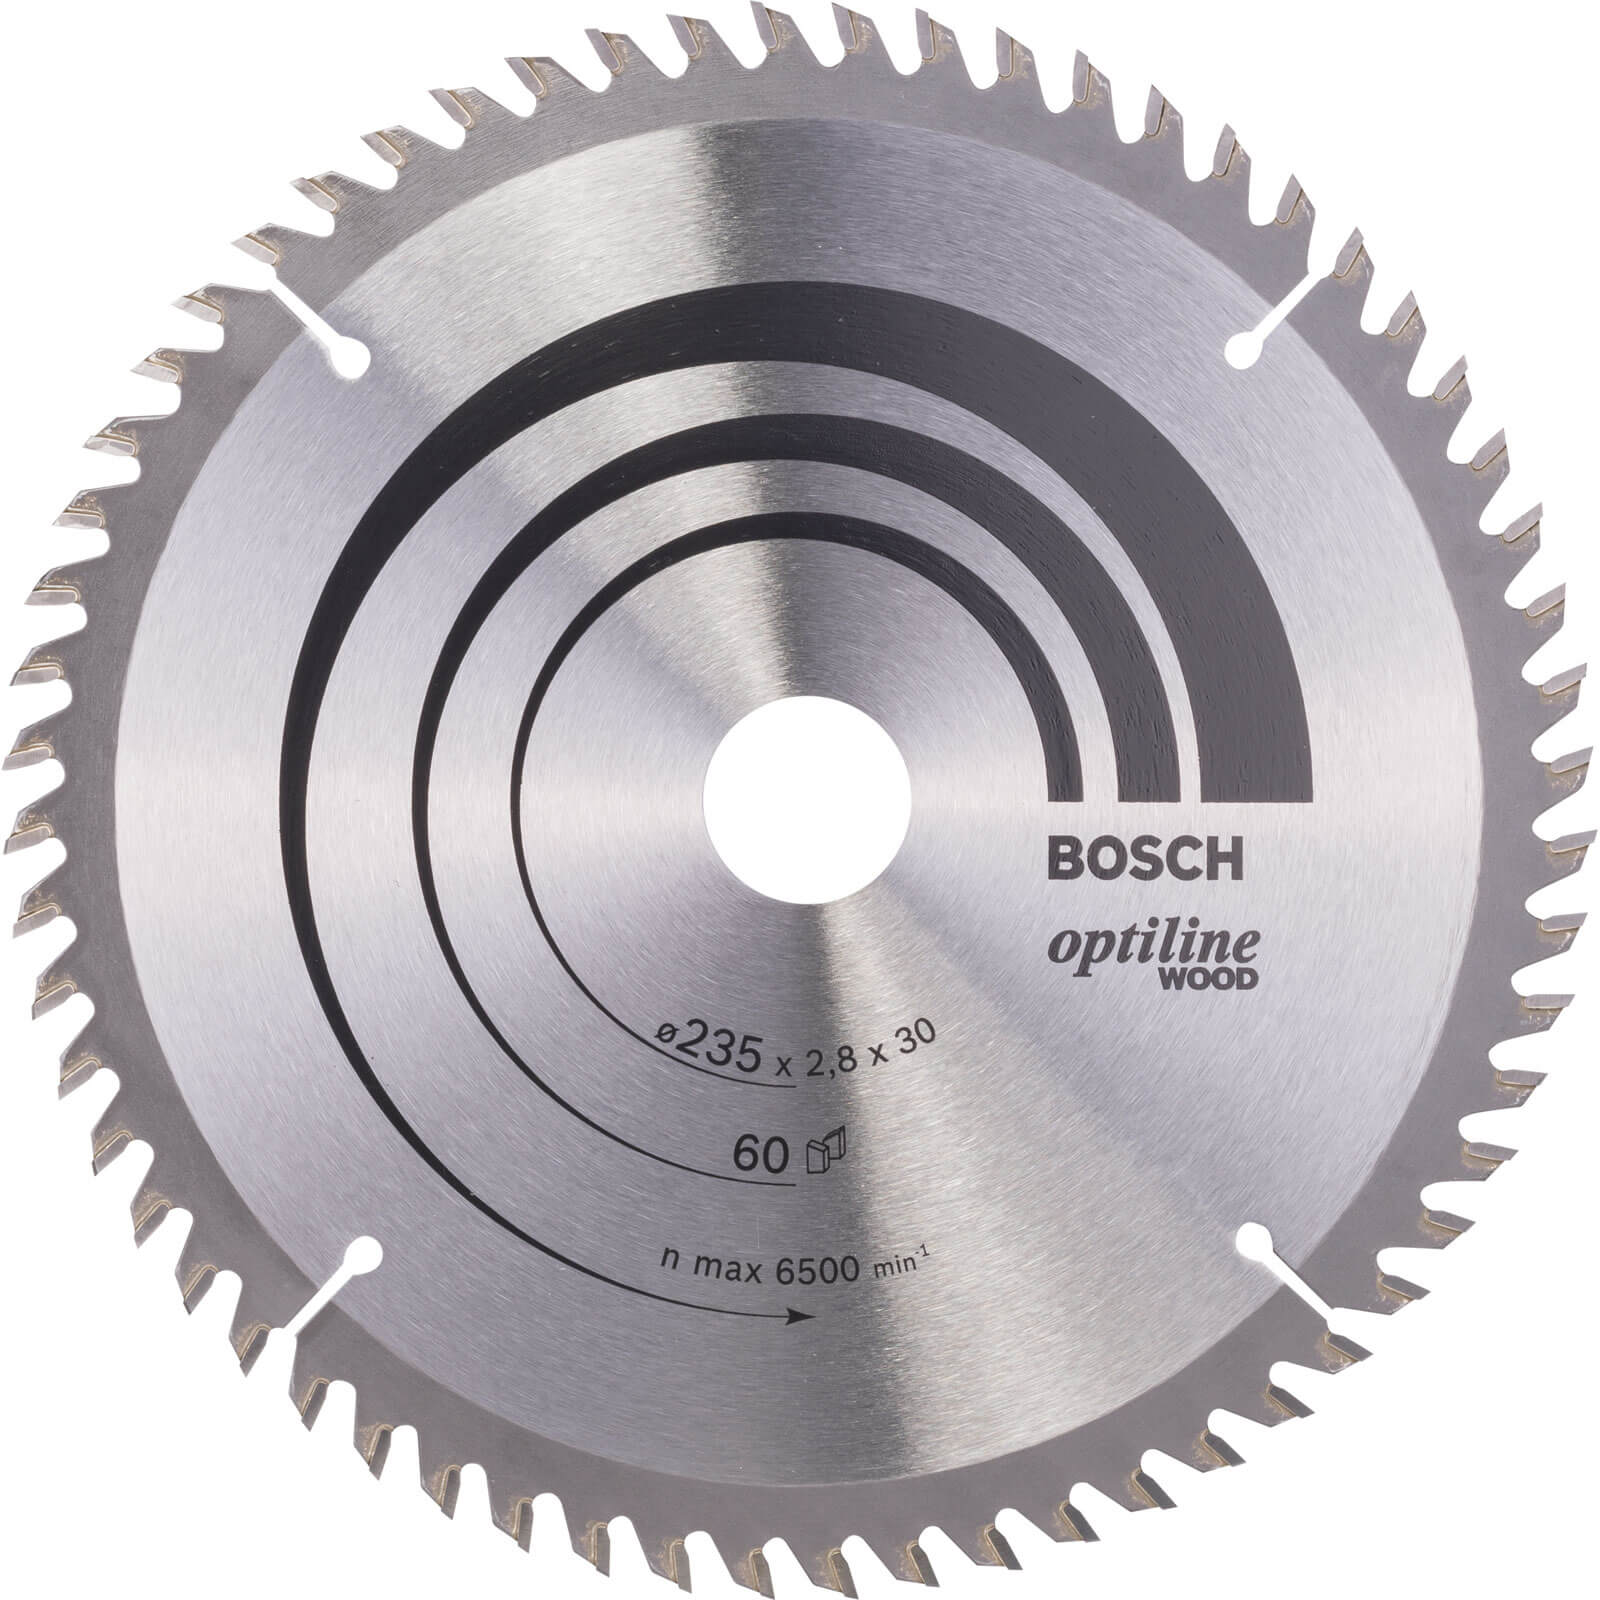 Photos - Power Tool Accessory Bosch Optiline Wood Cutting Saw Blade 235mm 60T 30mm 